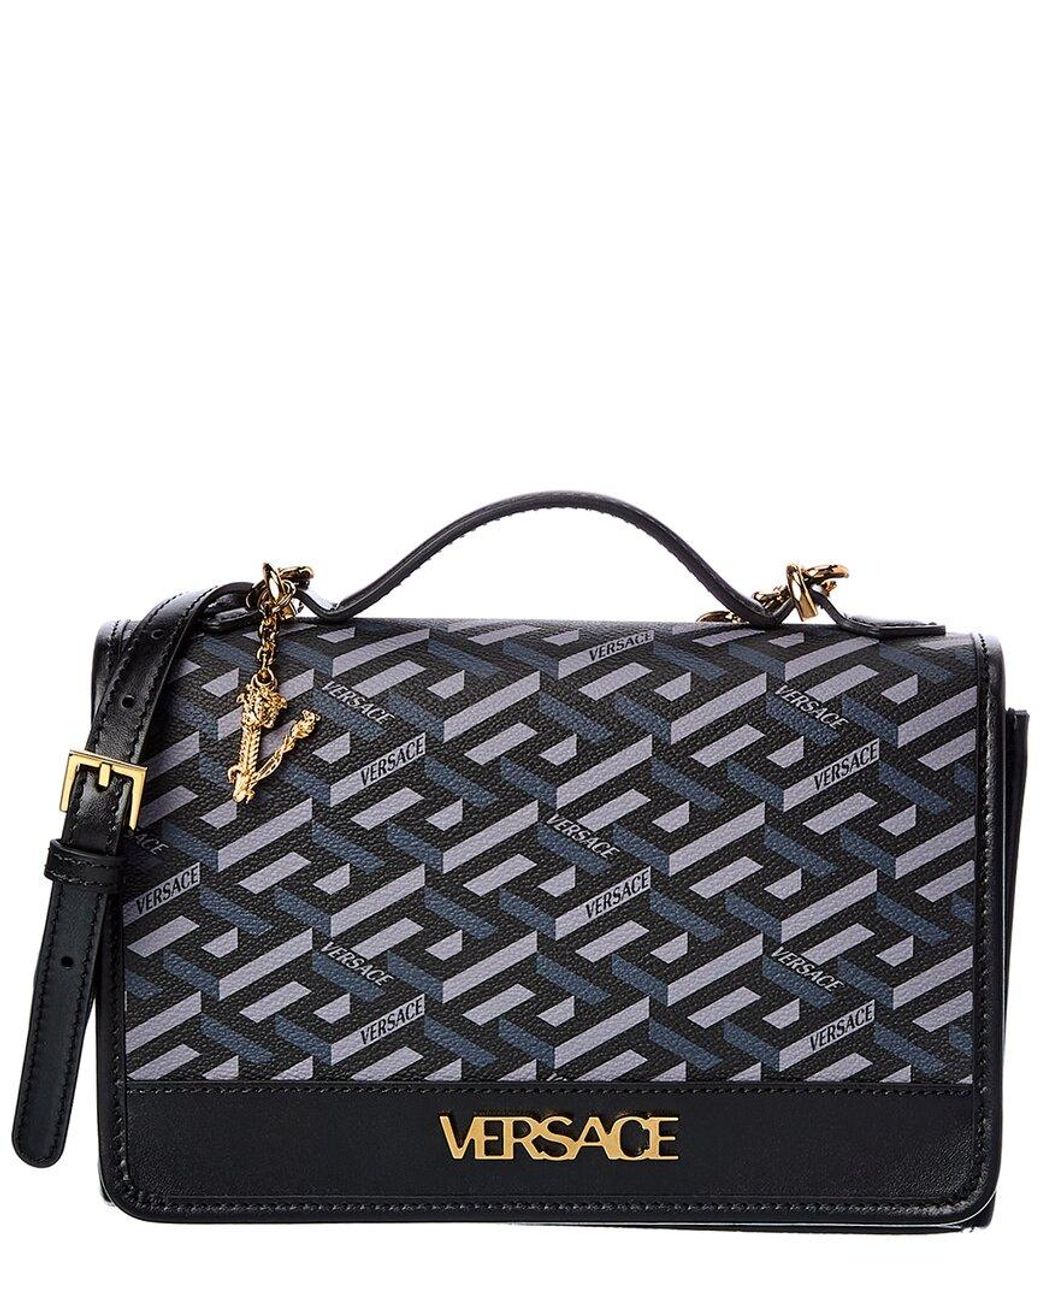 Versace La Greca Signature Coated Canvas & Leather Shoulder Bag in ...